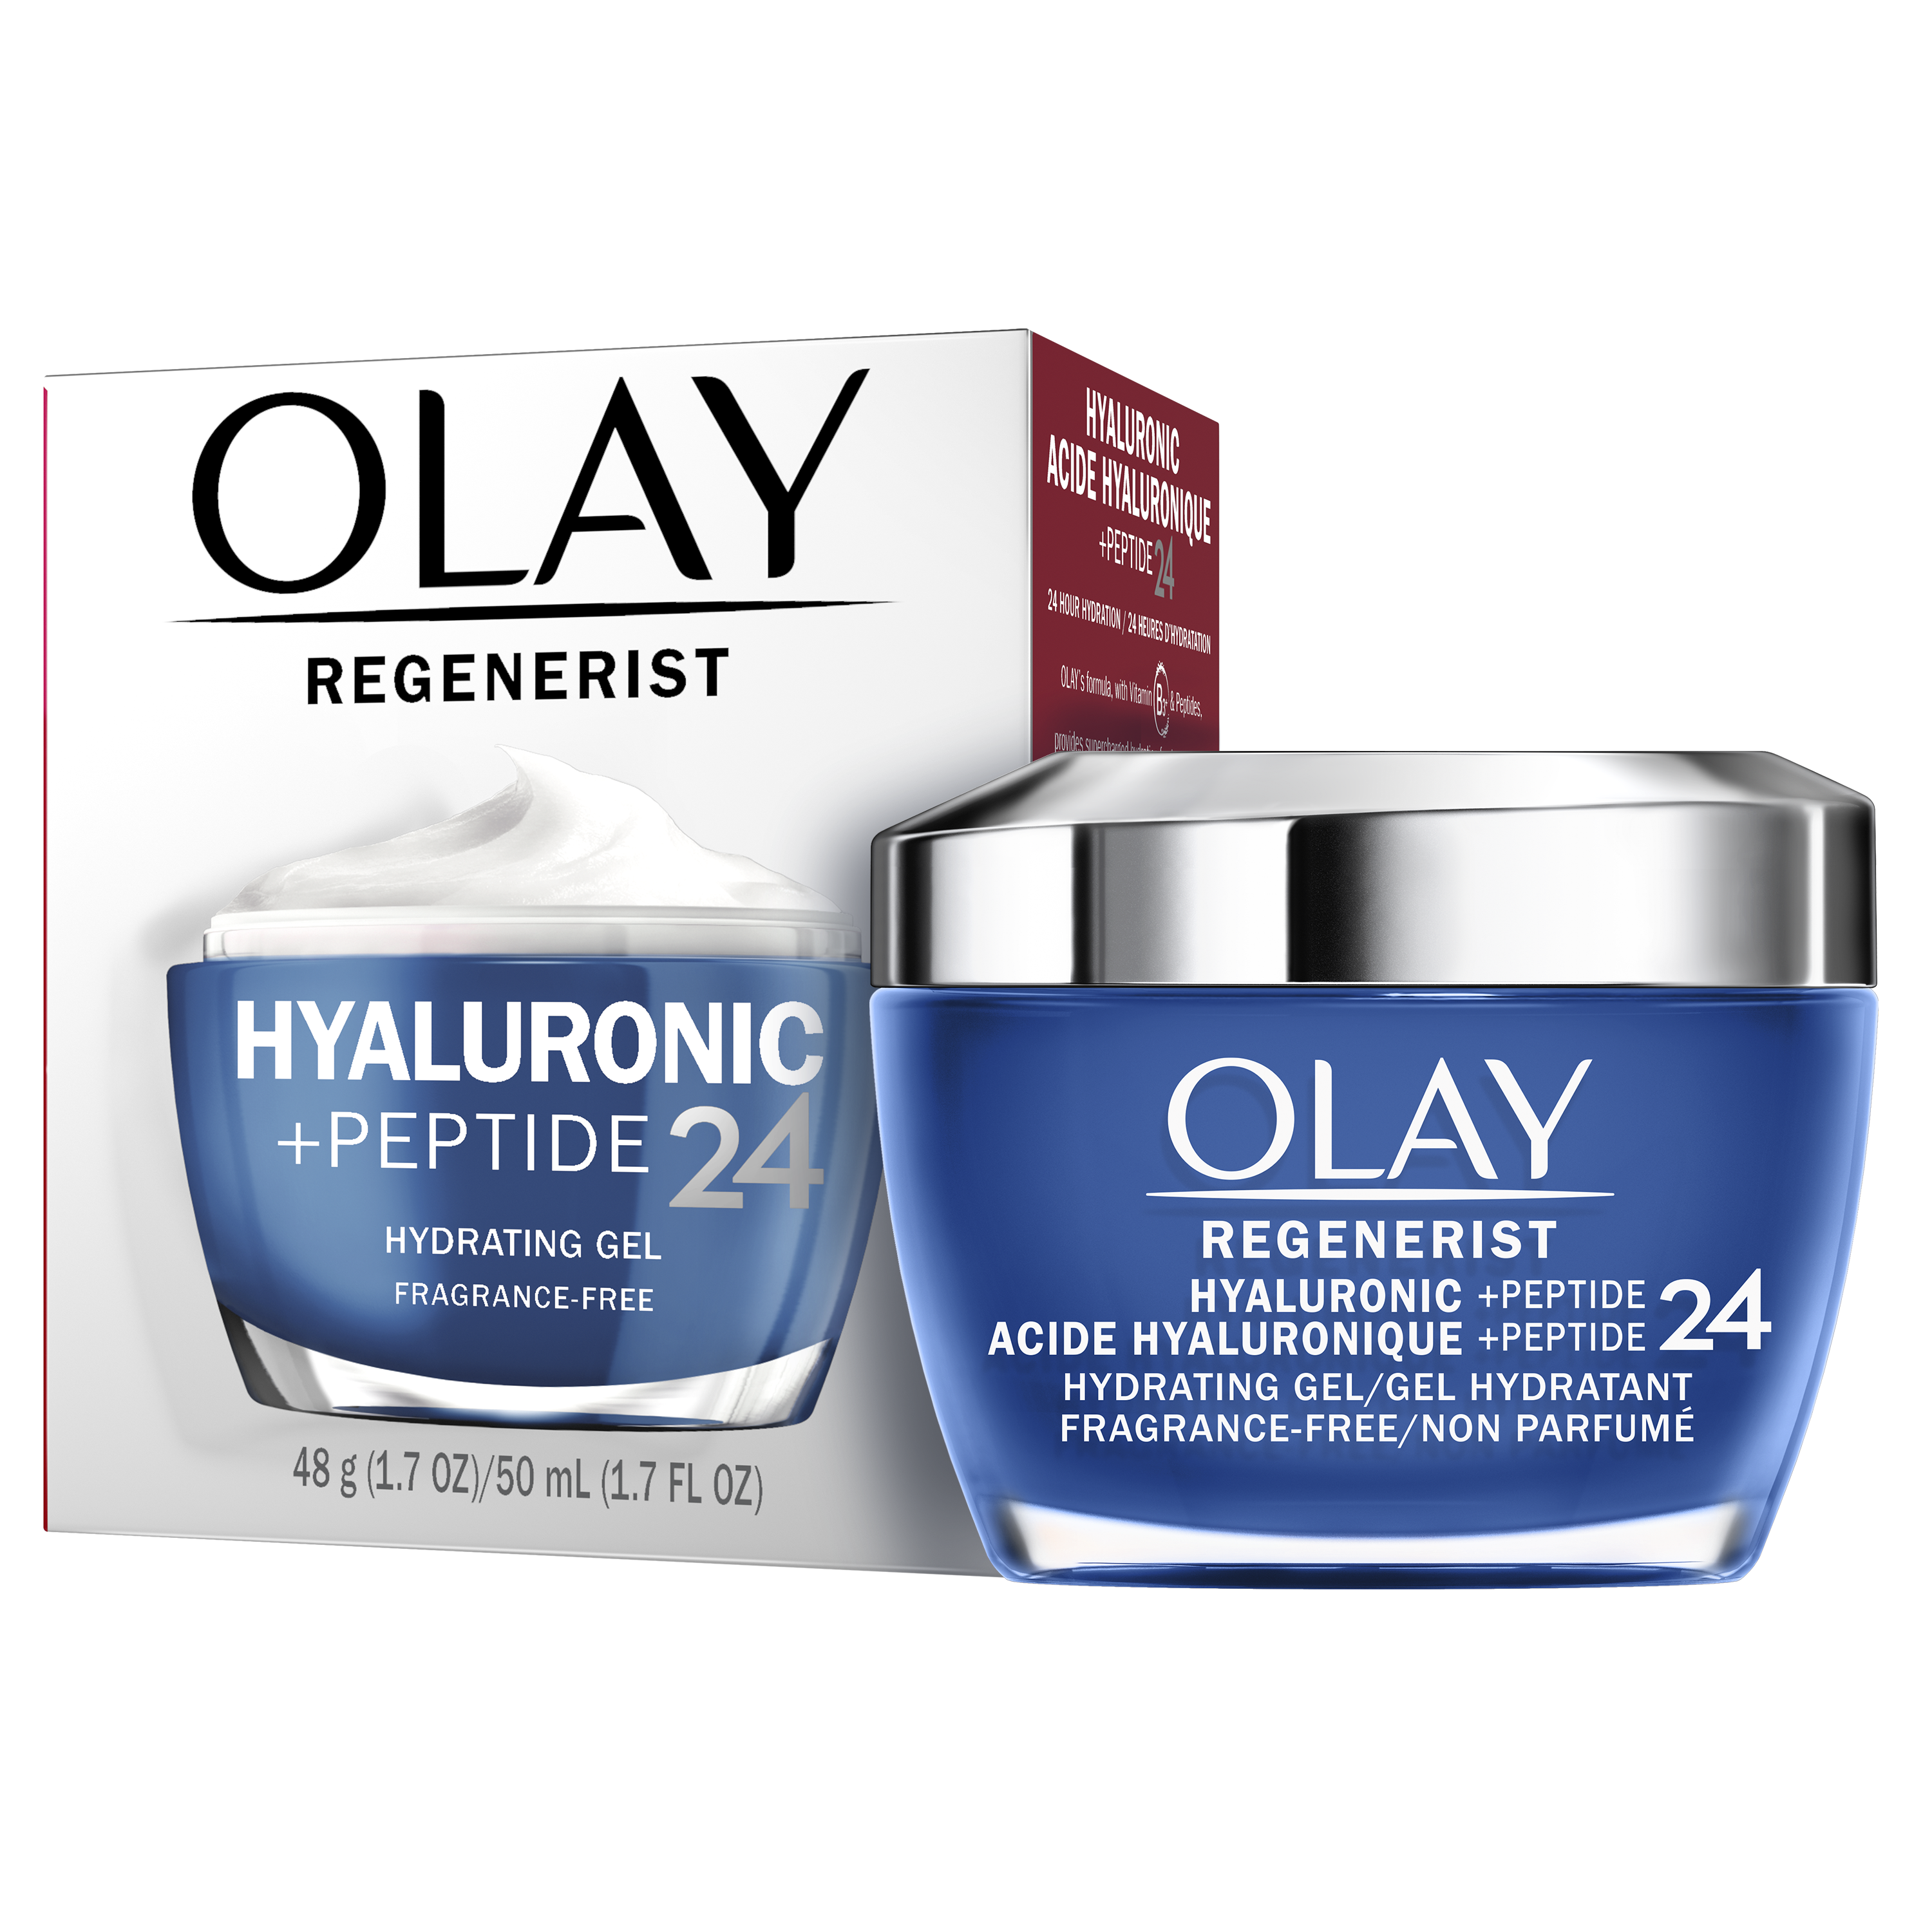 Olay Regenerist Hyaluronic + Peptide 24 Gel Face Moisturizer